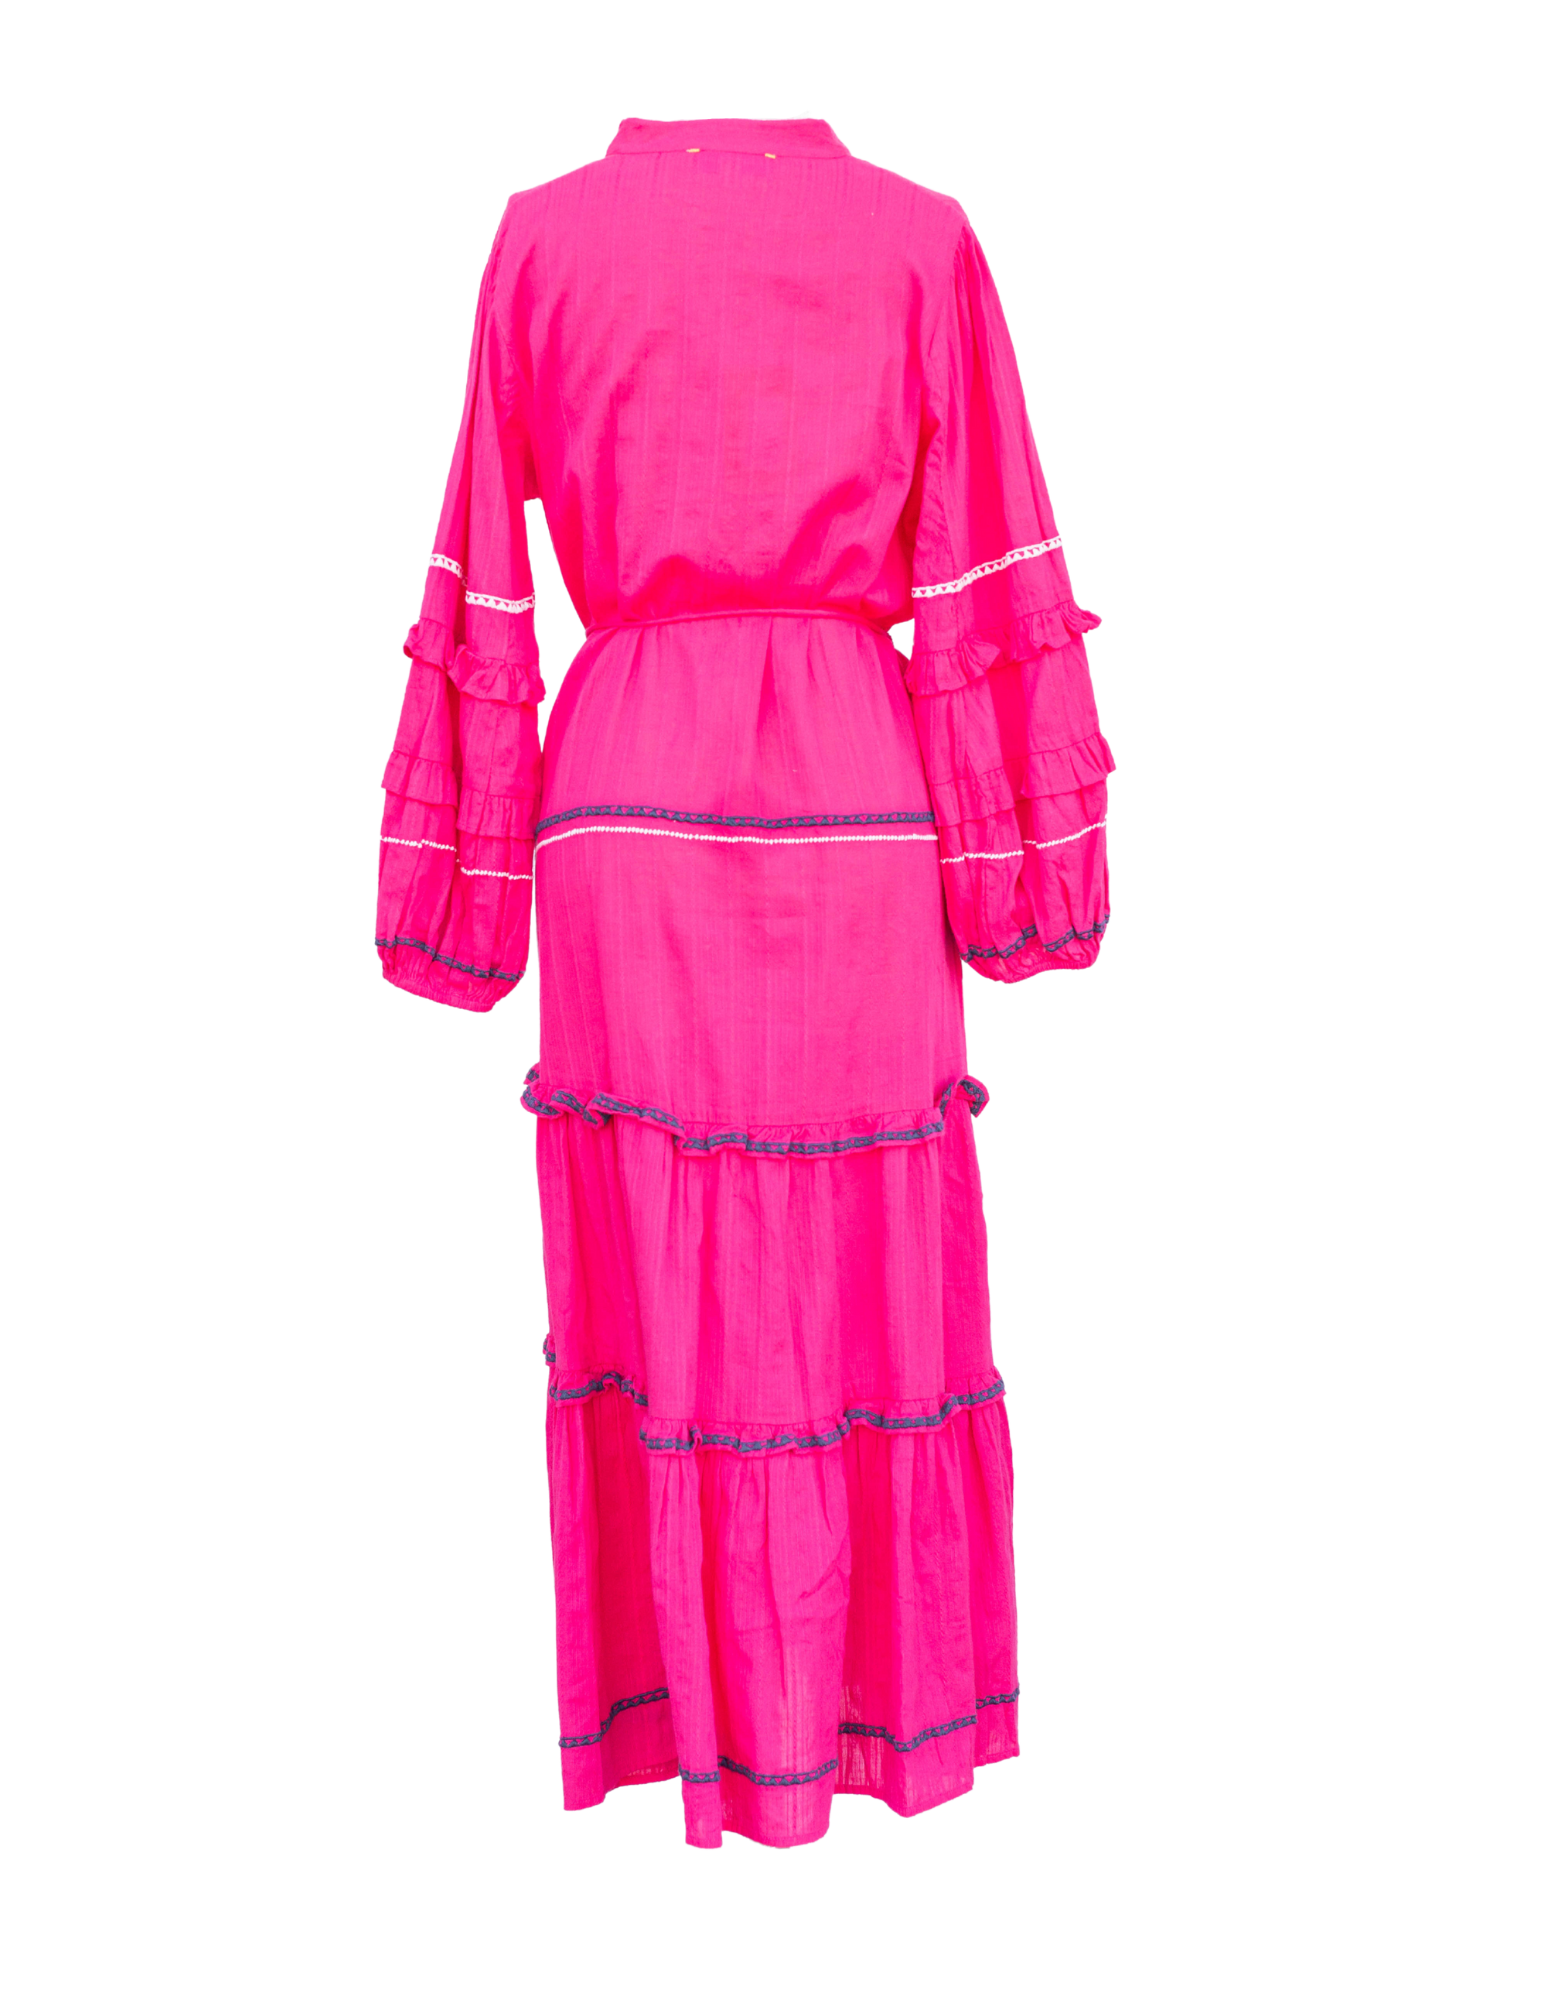 Pheobe Cotton Dress - Berry Pink